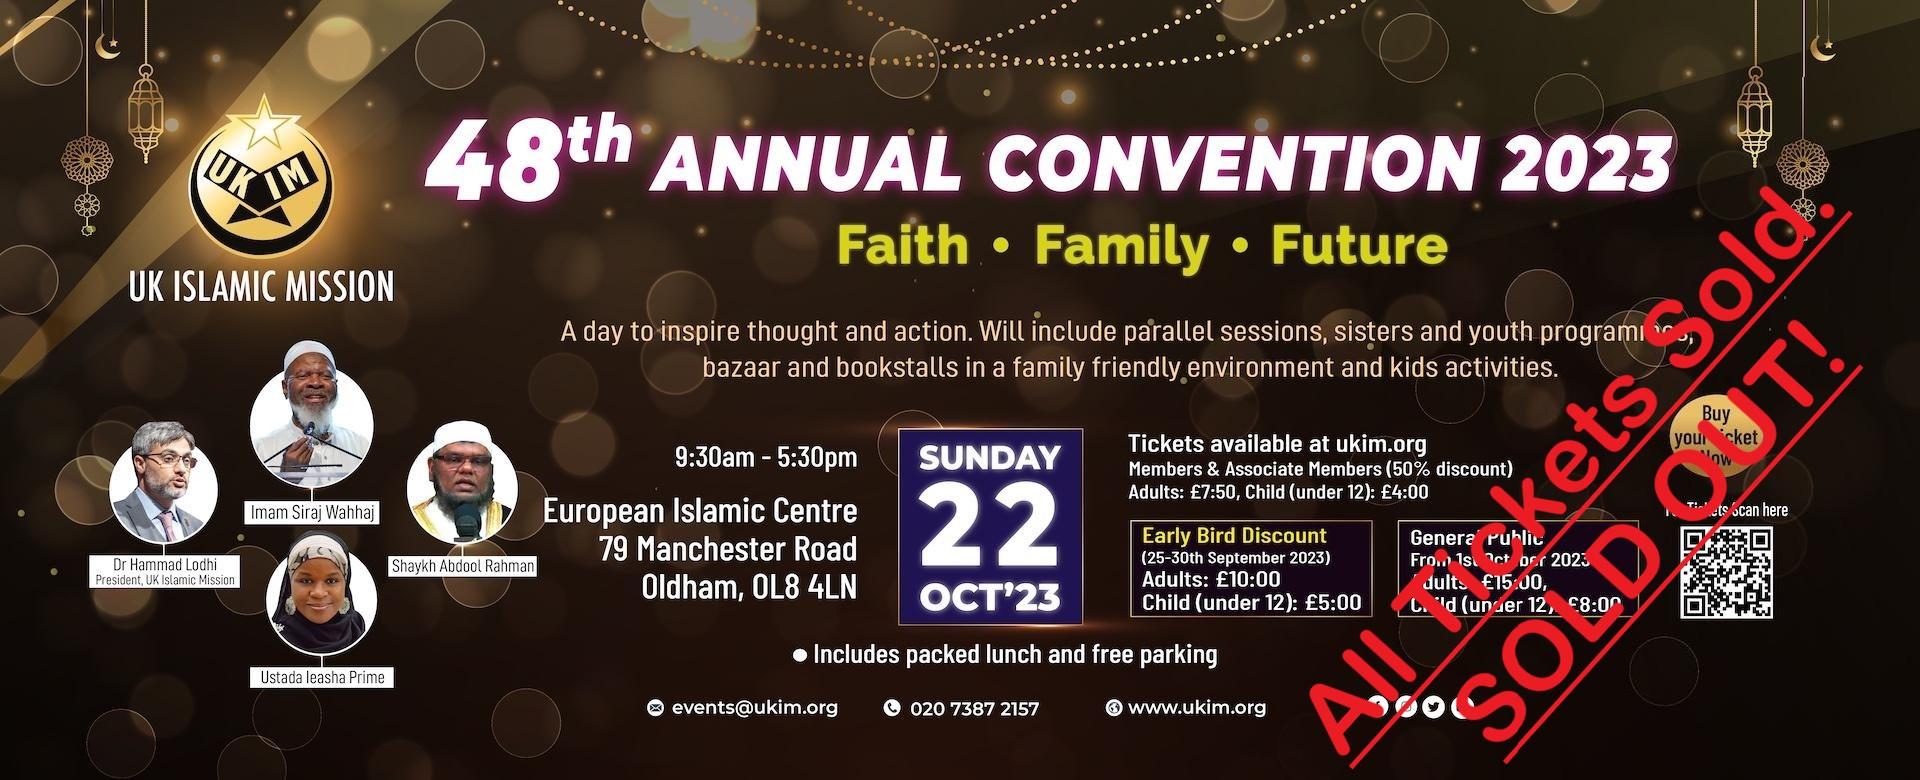 UKIM 48th Annual Convention 2023